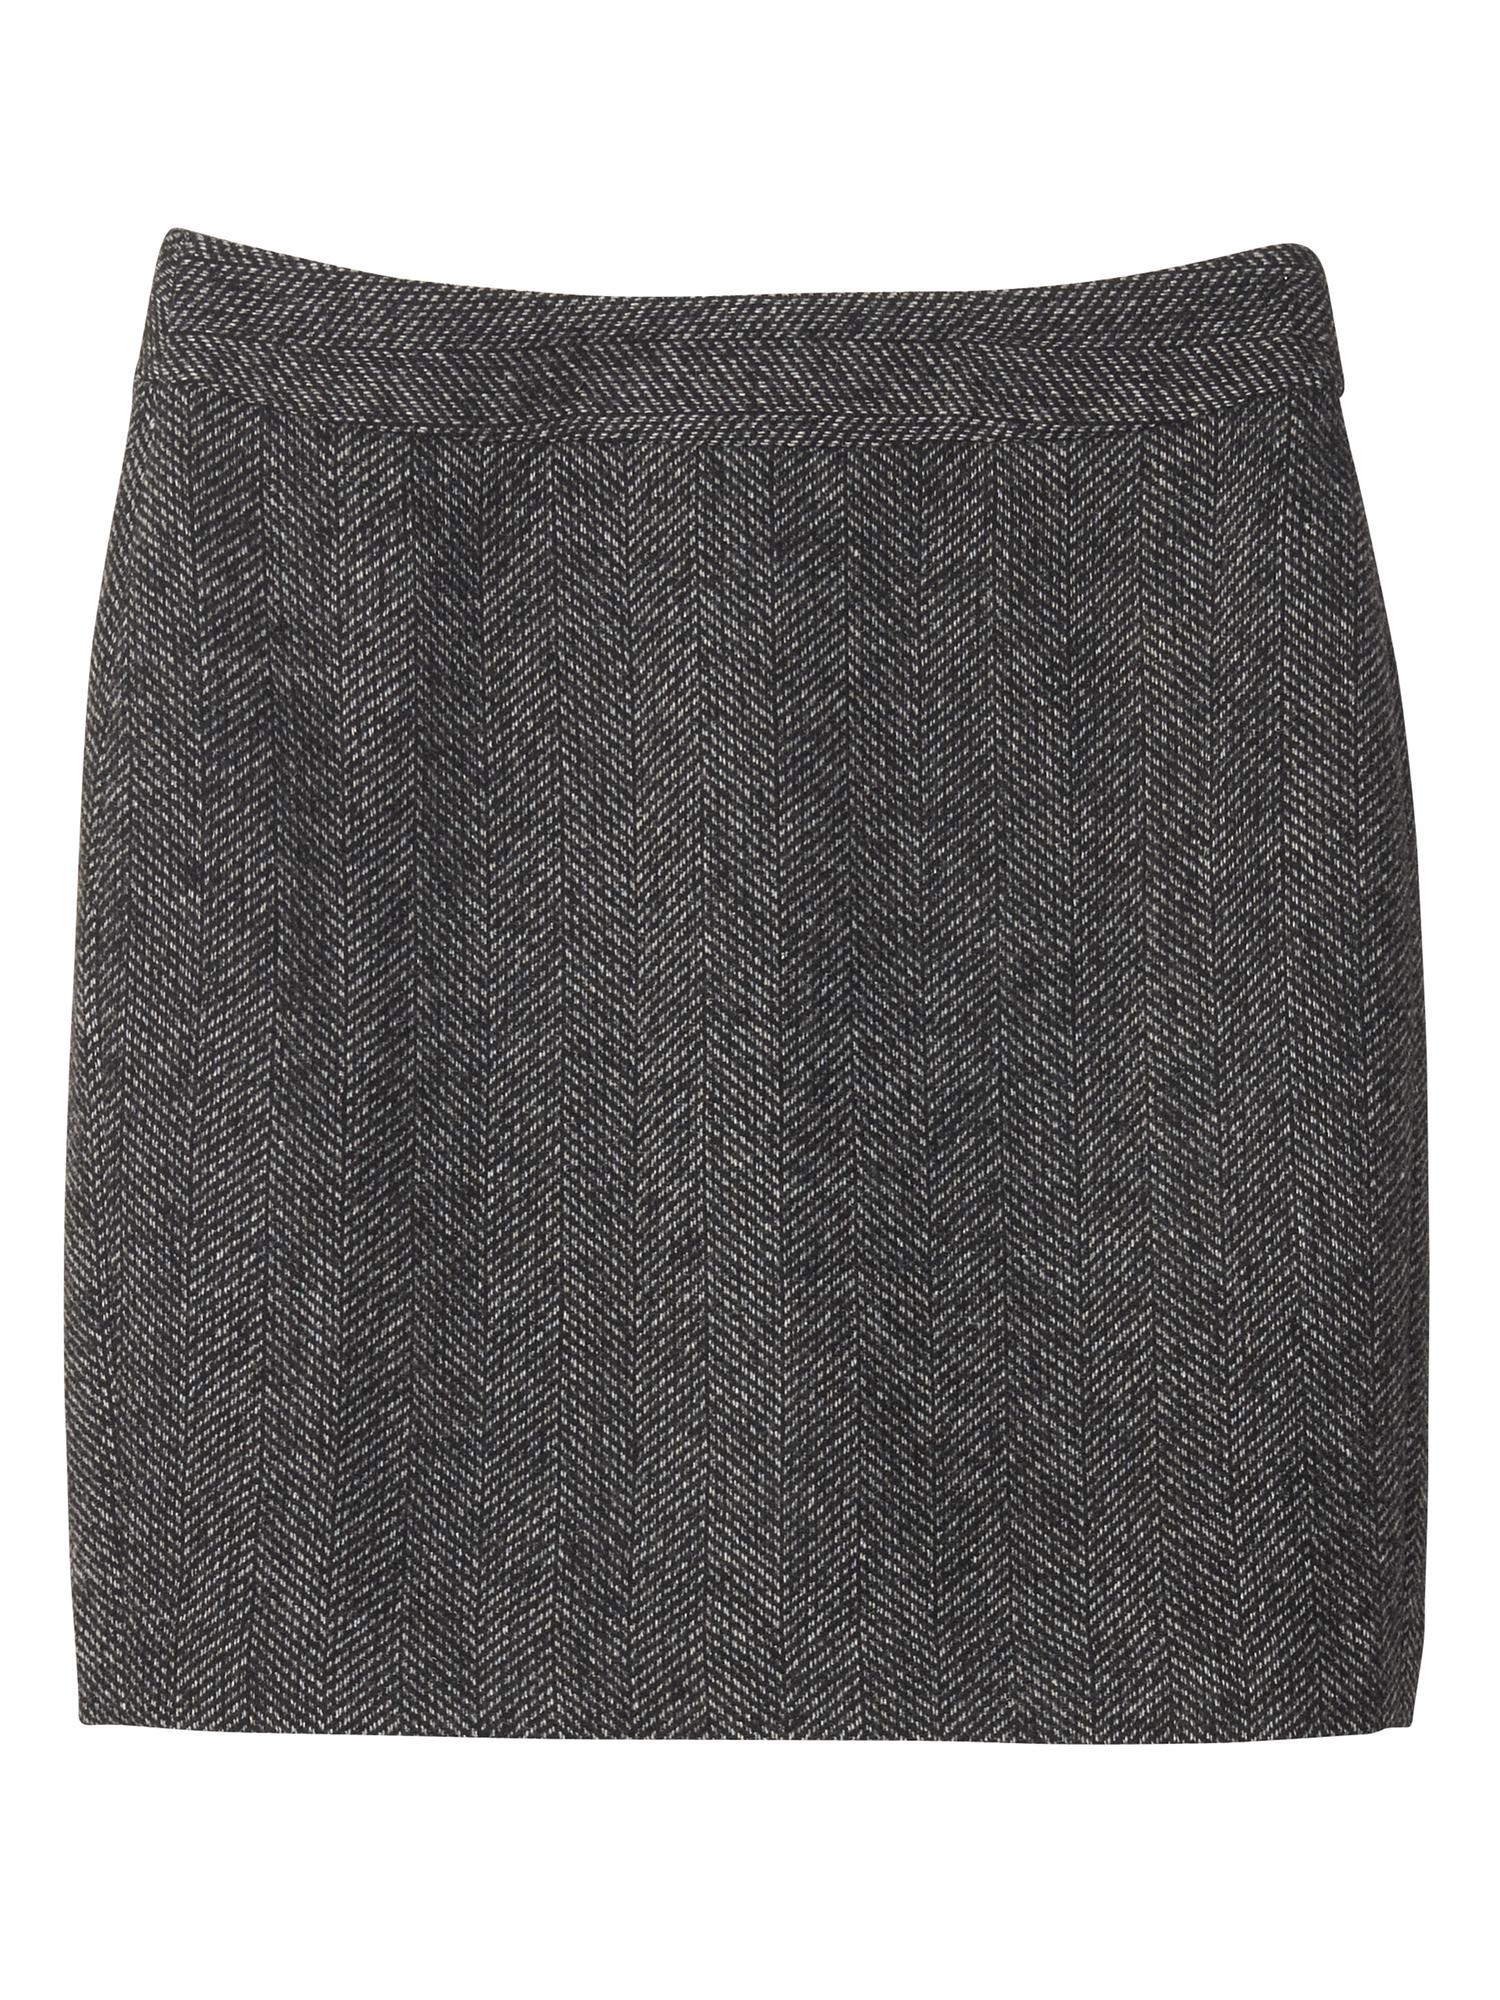 Herringbone Pencil Skirt